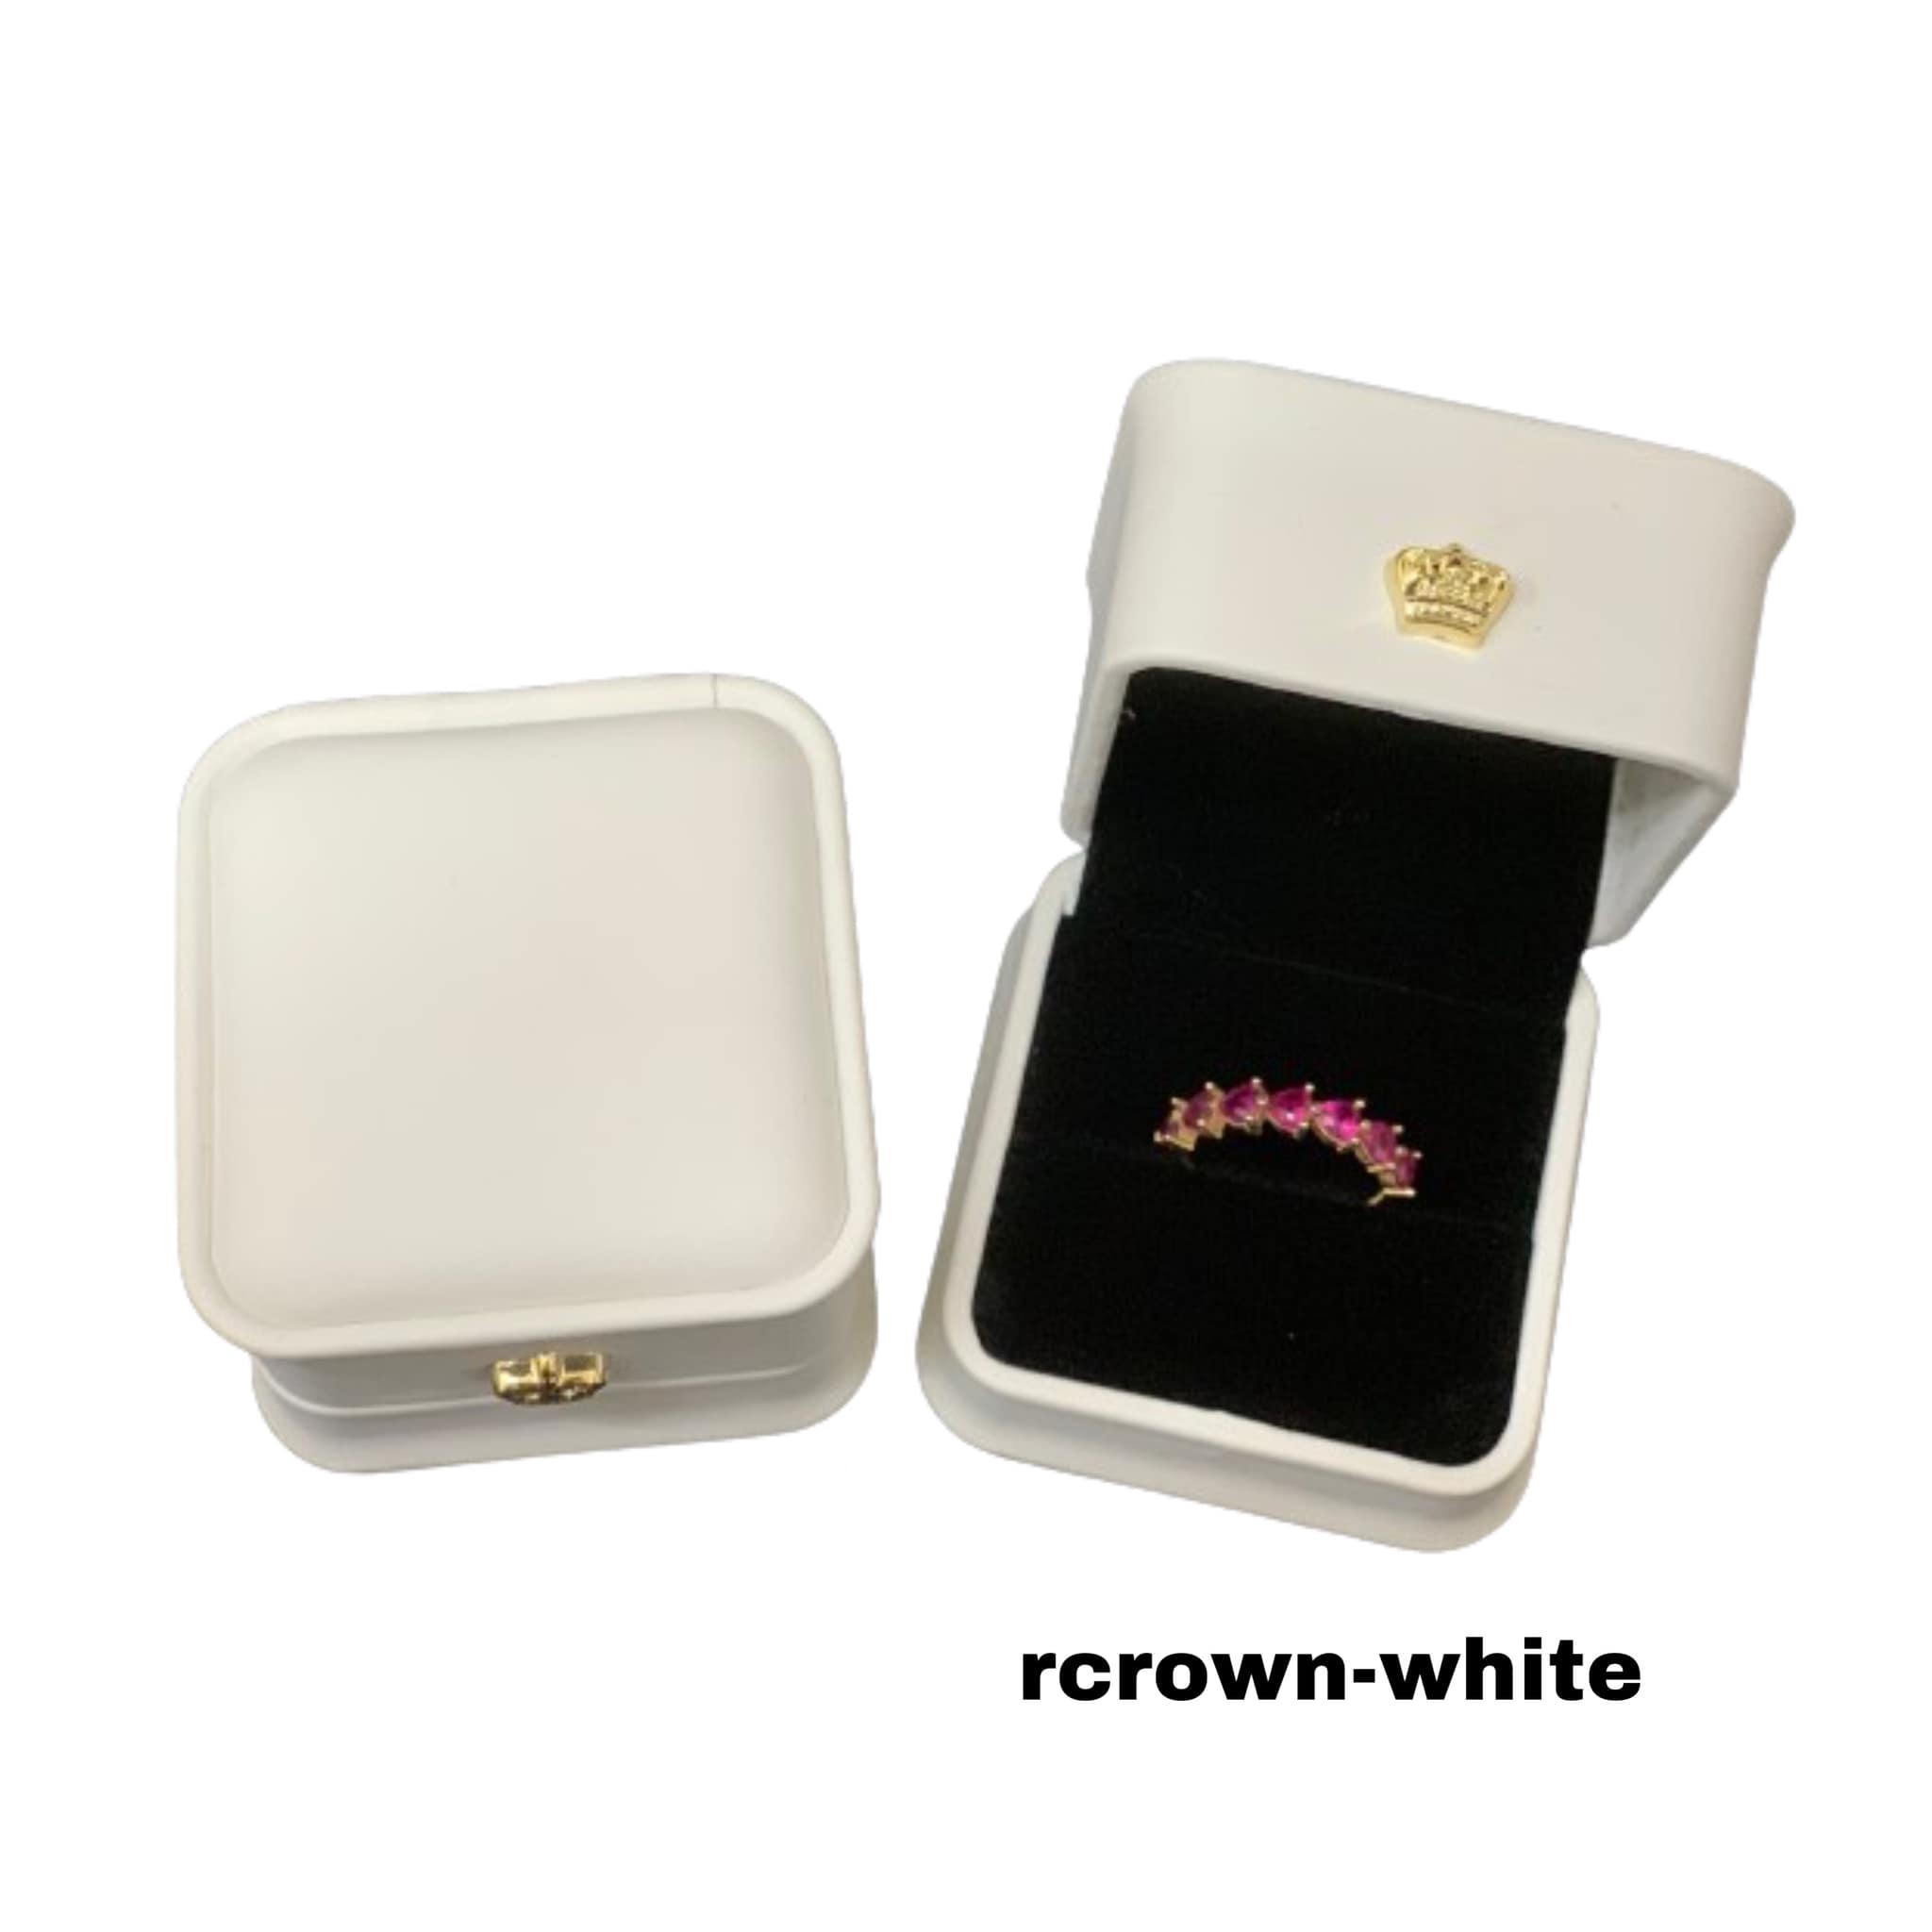 rcrown-white